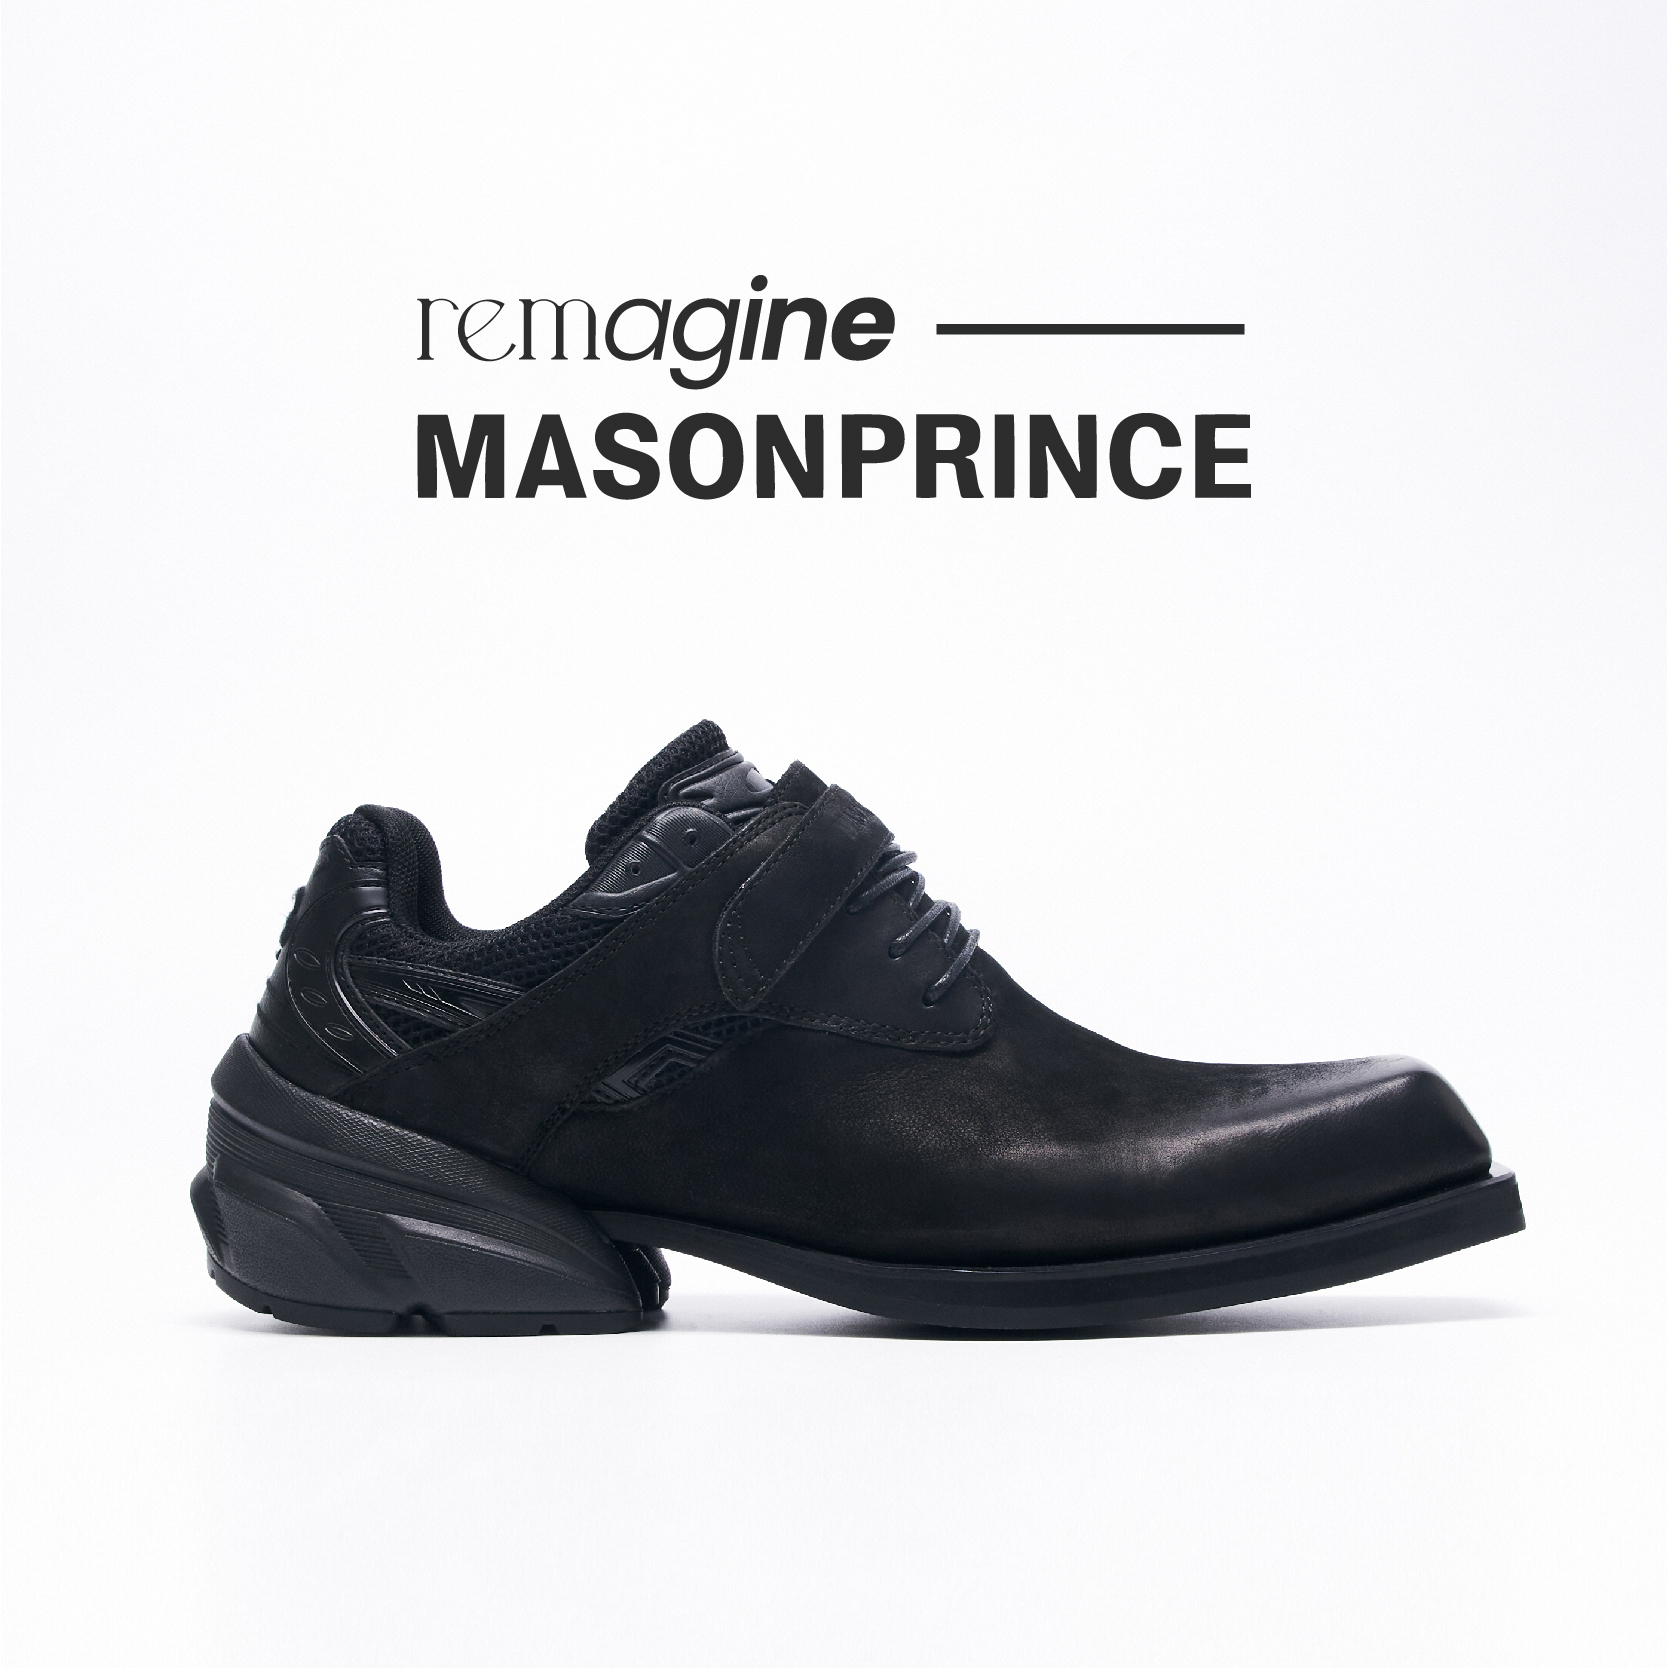 Mason Prince - hybrid derby shoes “starting blocks” - Remagine